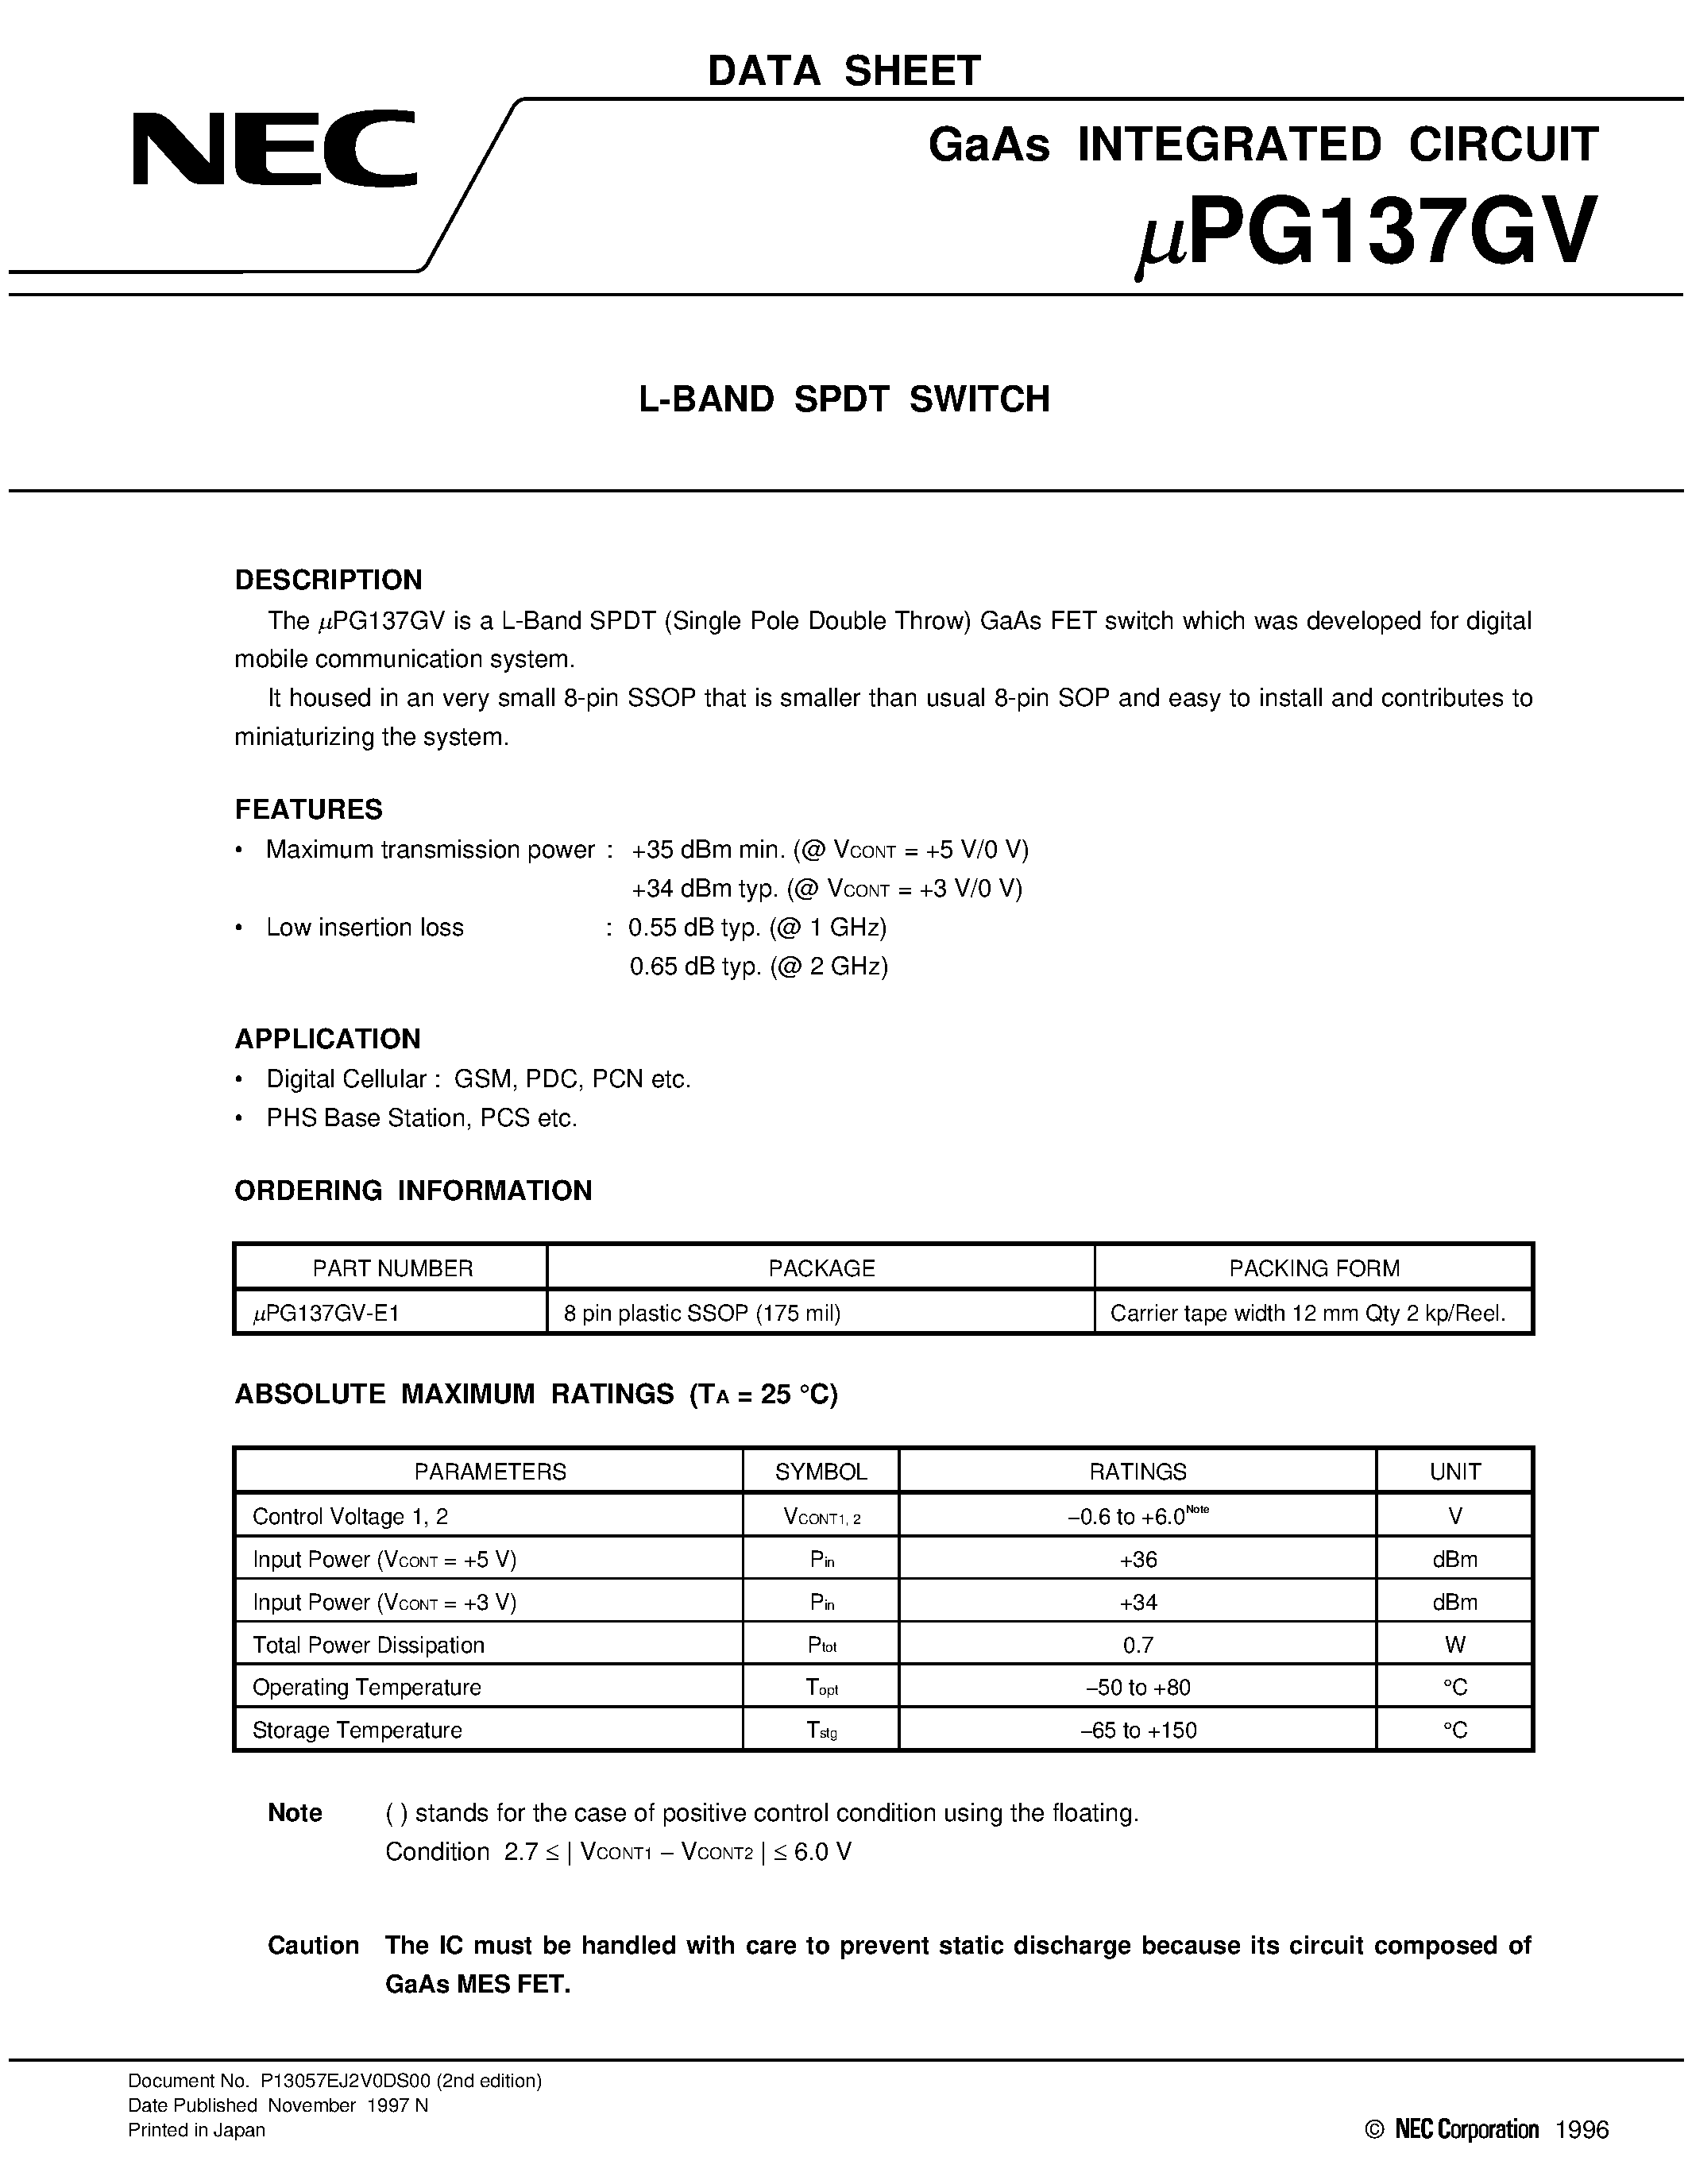 Datasheet UPG137GV-E1 - L-BAND SPDT SWITCH page 1